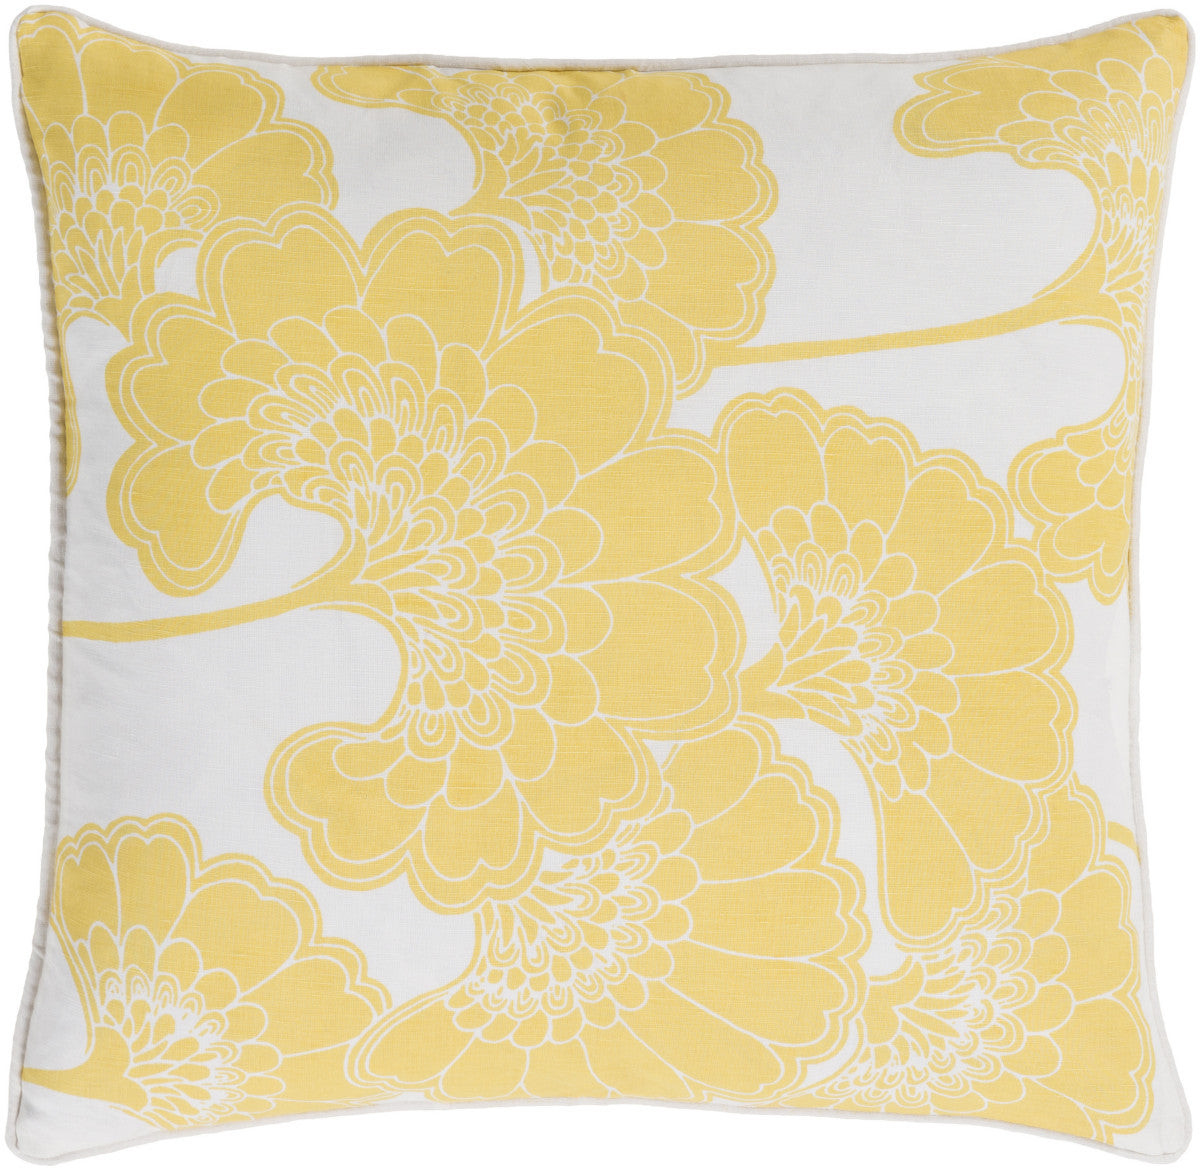 Surya Japanese Floral JA005 Pillow by Florence Broadhurst